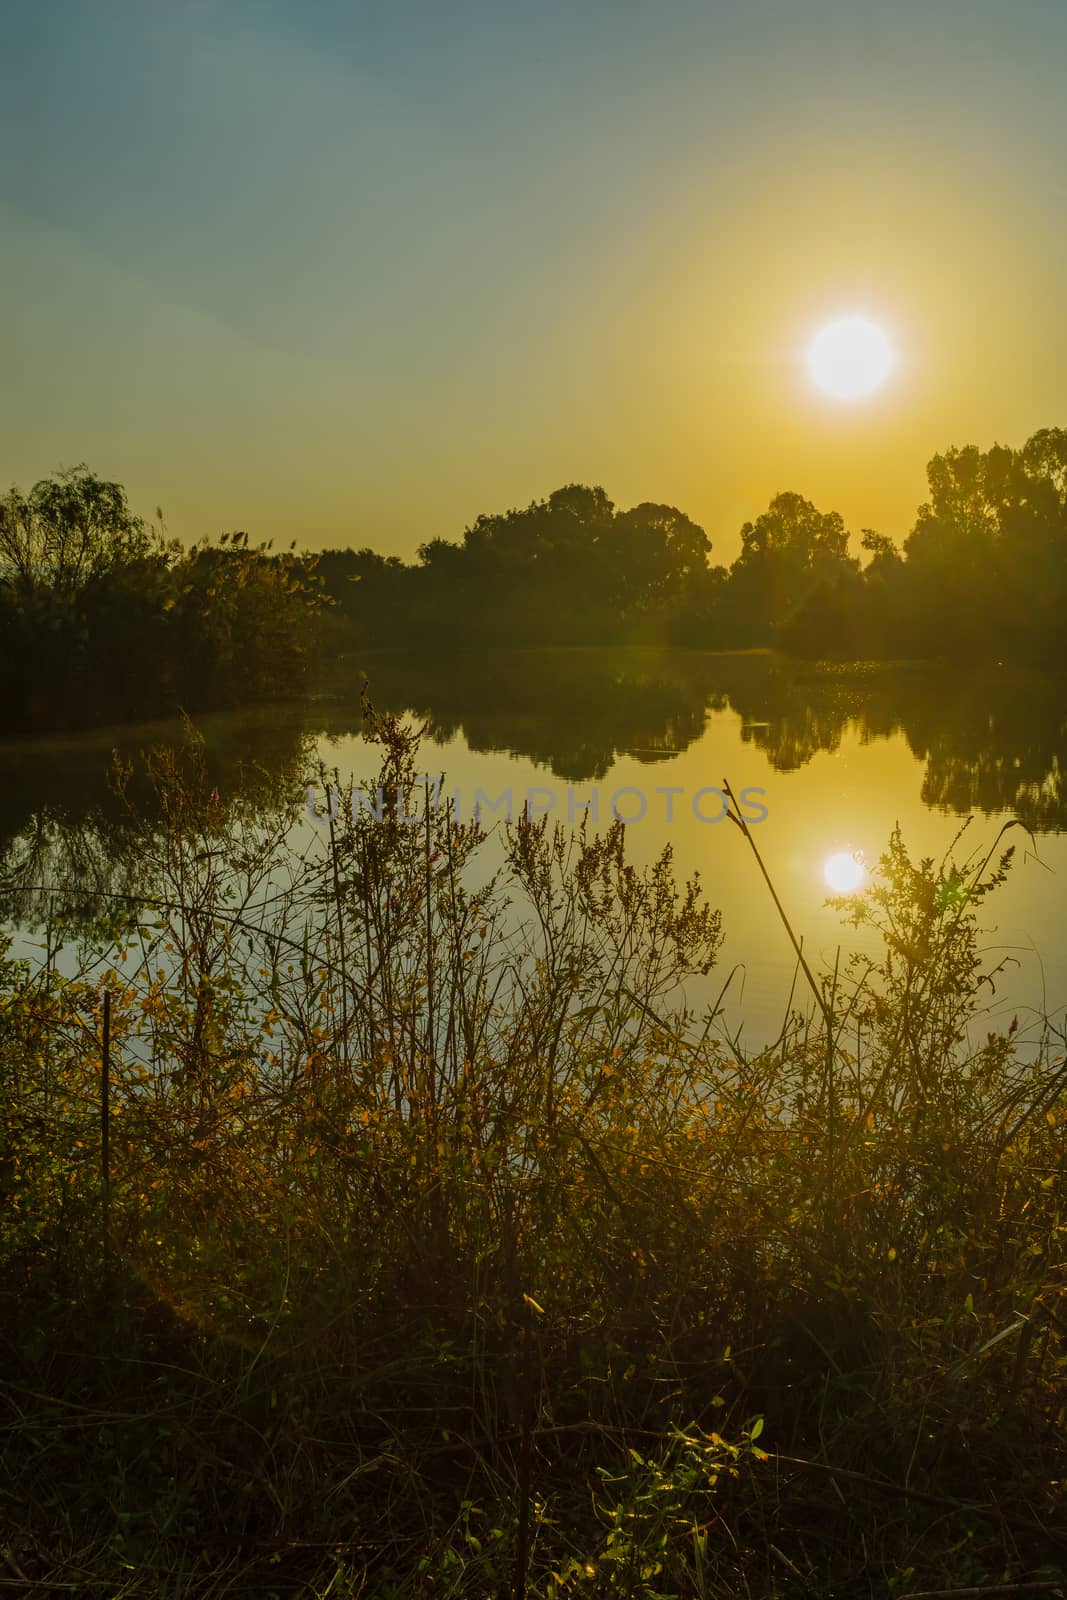 Morning view over wetland, in En Afek nature reserve by RnDmS